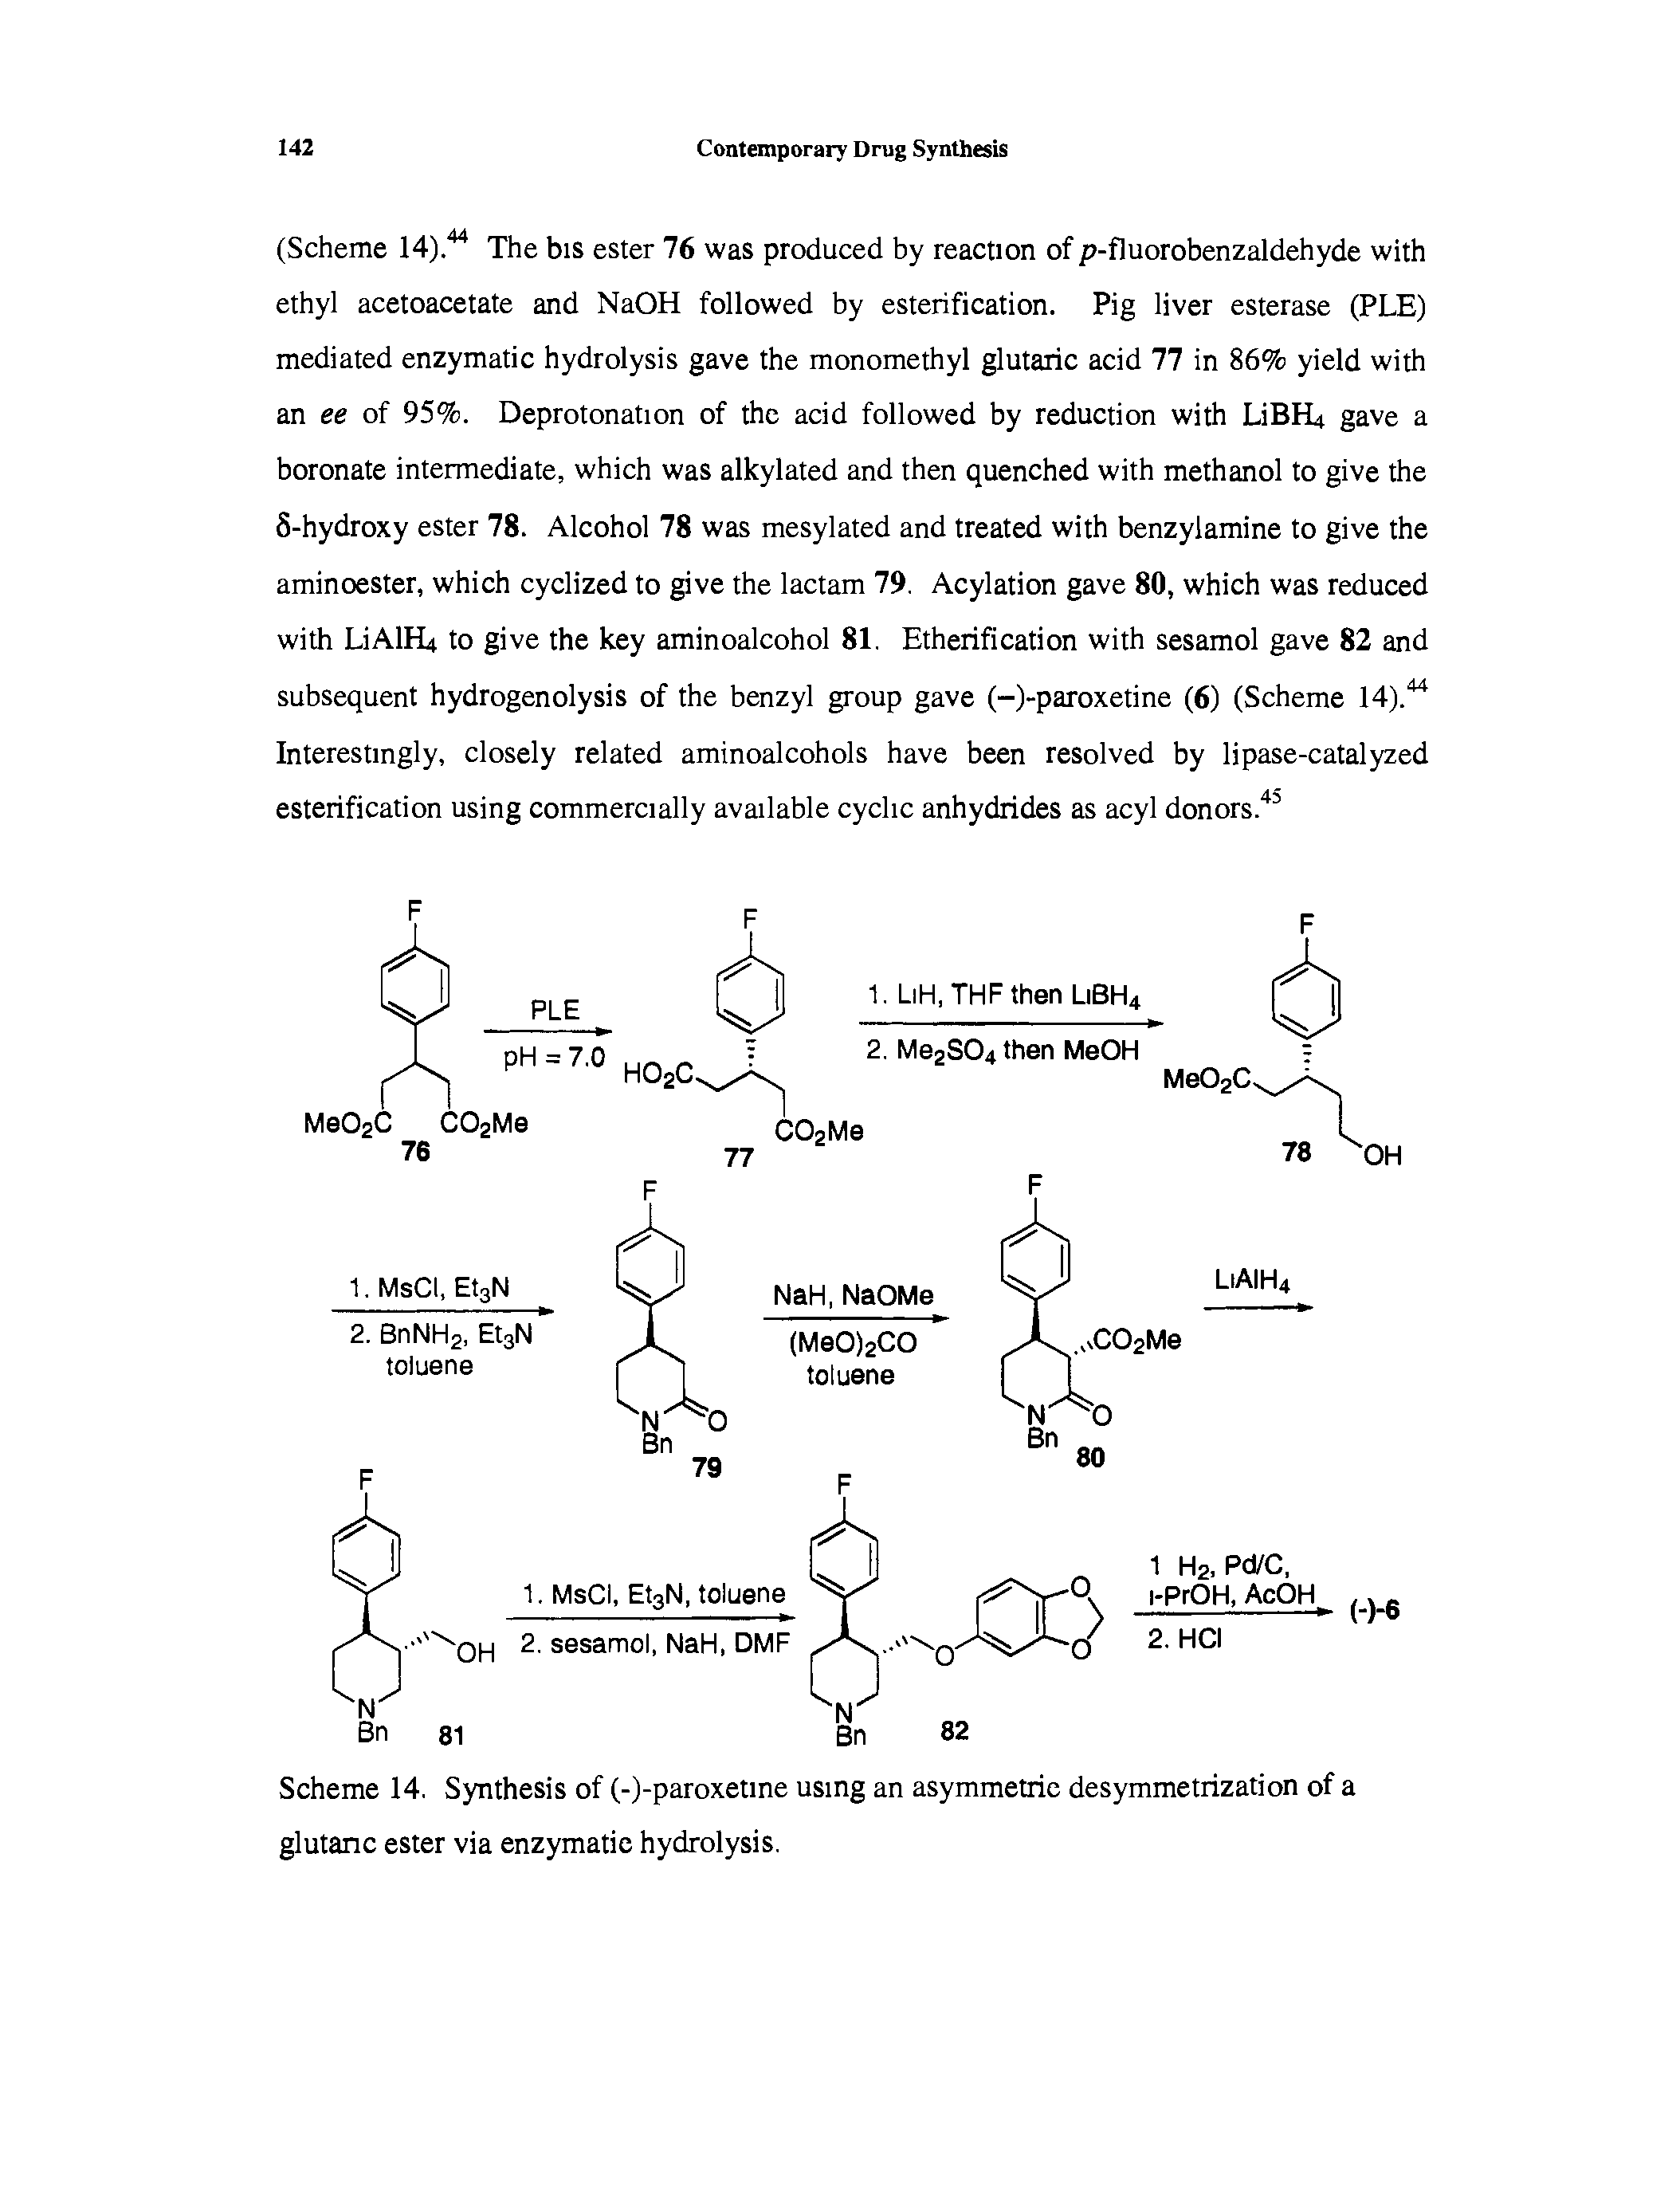 Scheme 14. Synthesis of (-)-paroxetine using an asymmetric desymmetrization of a glutaric ester via enzymatic hydrolysis.